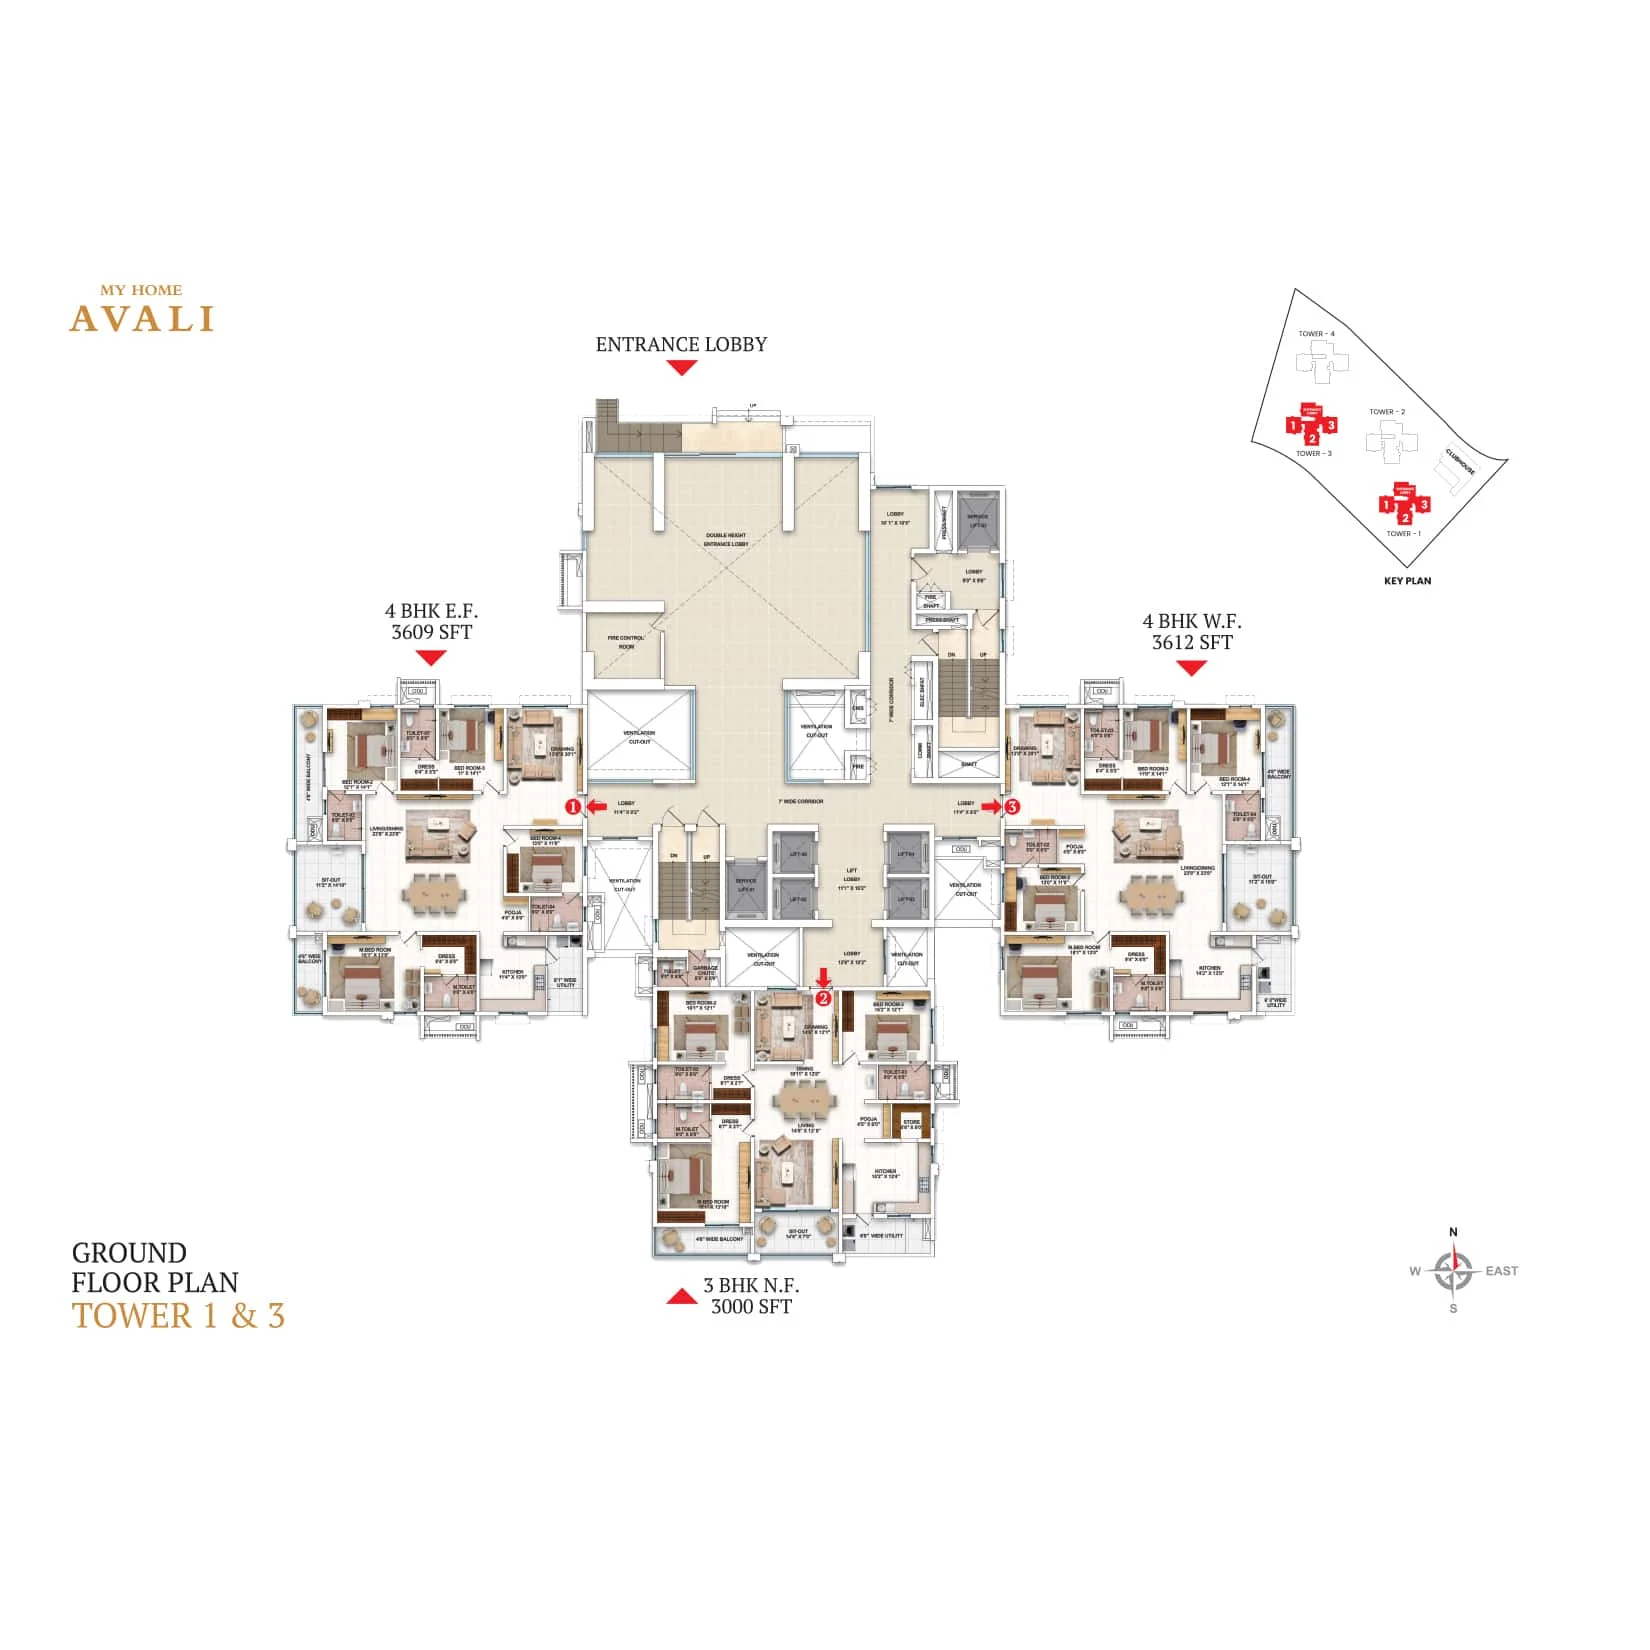 My Home Avali Floor Plan